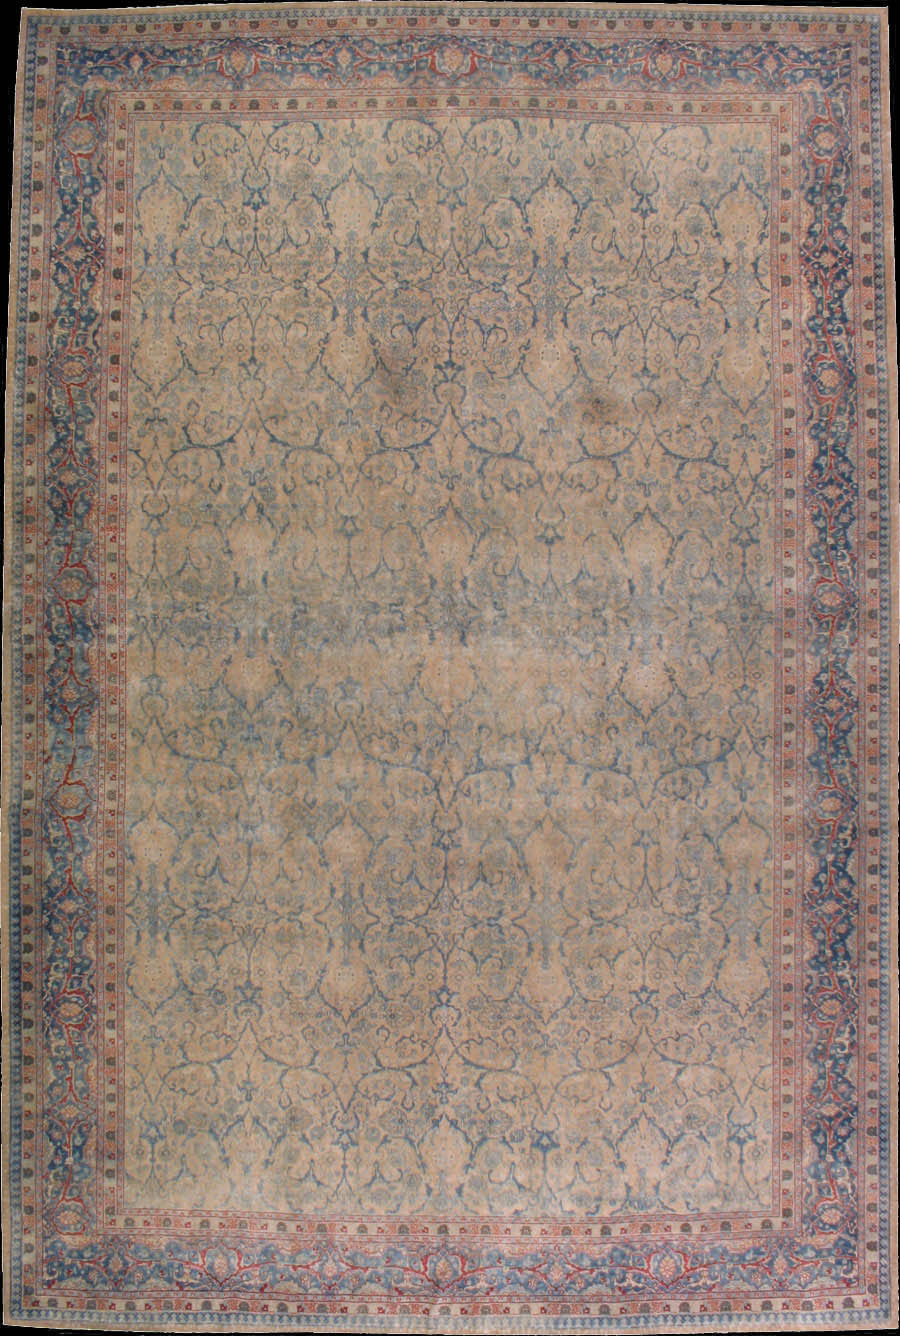 Antique tabriz Carpet - # 40289